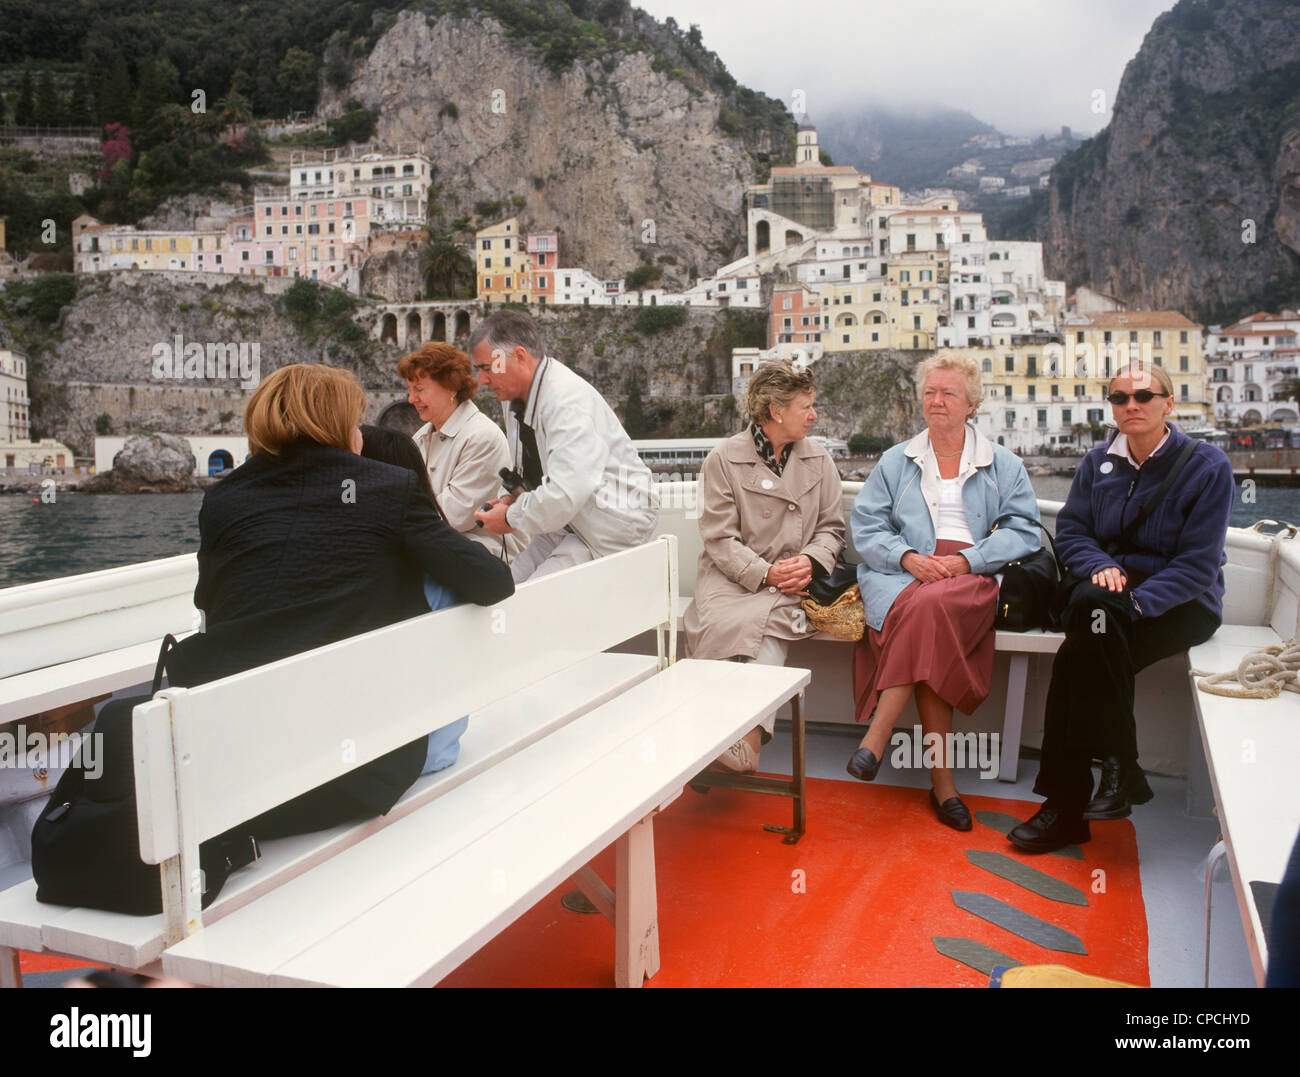 Italy Campania Amalfi Coast Tourists on Sightseeing boat  Stock Photo